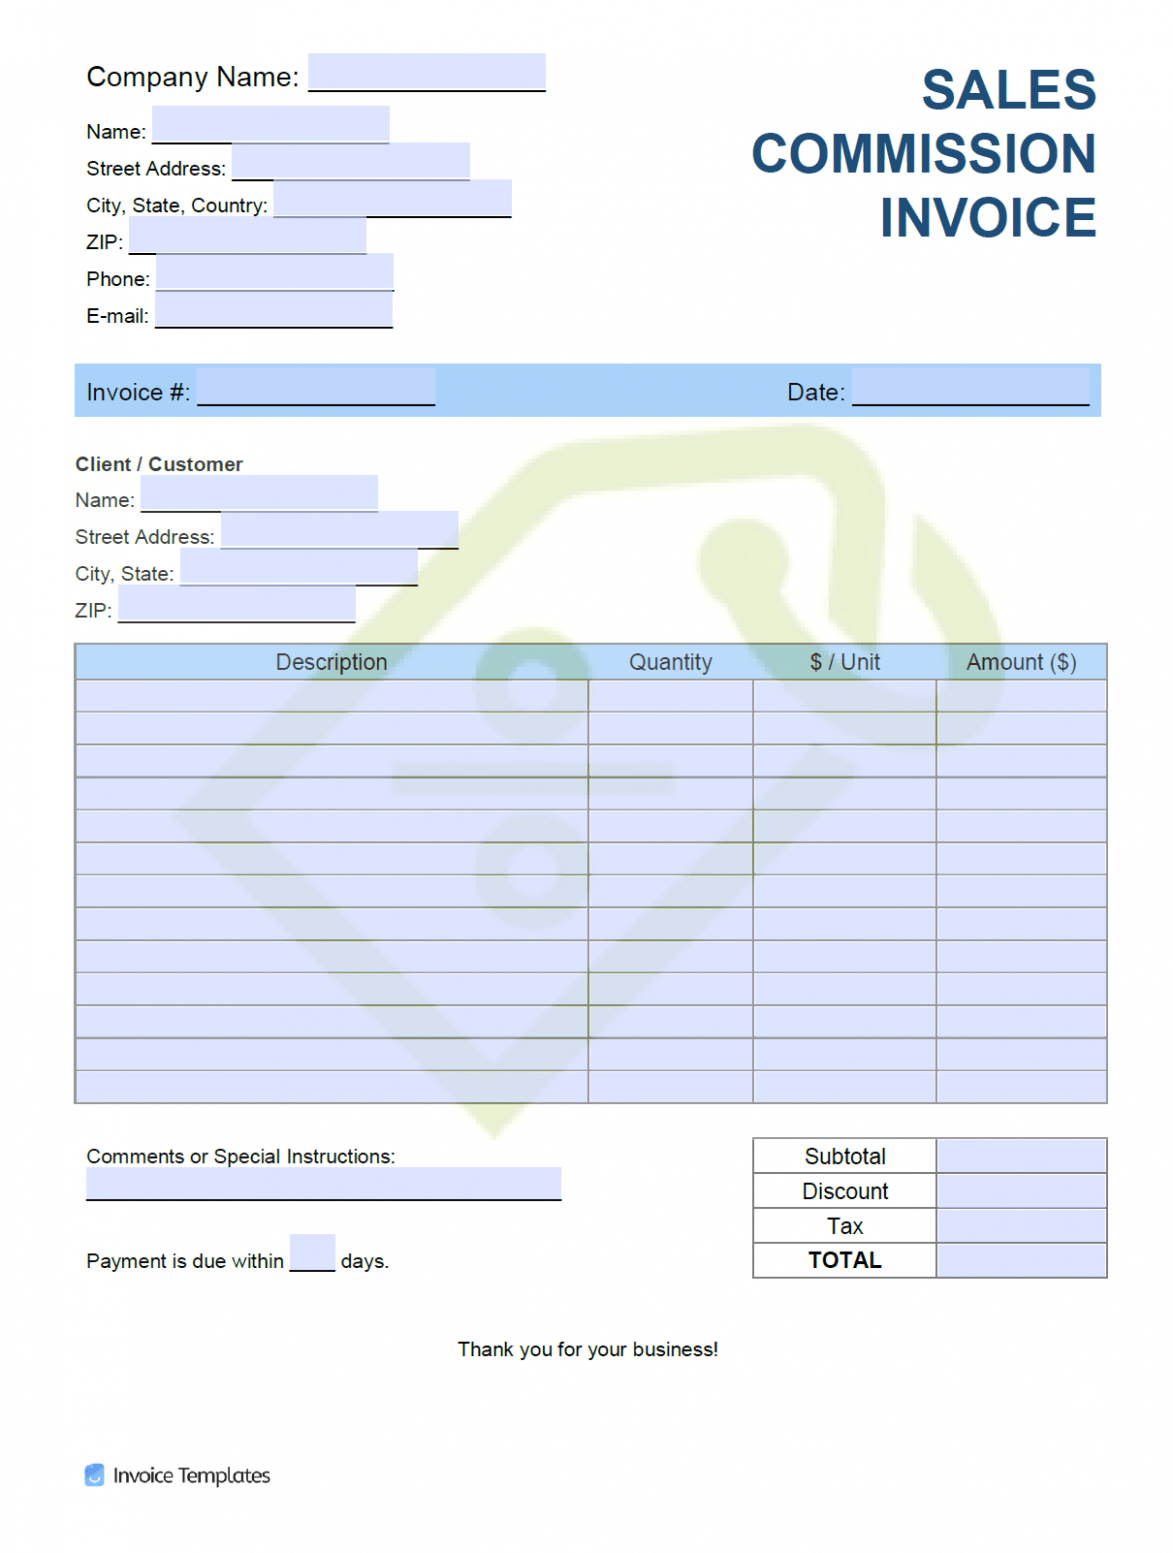 Sample Sales Commission Invoice Template PDF